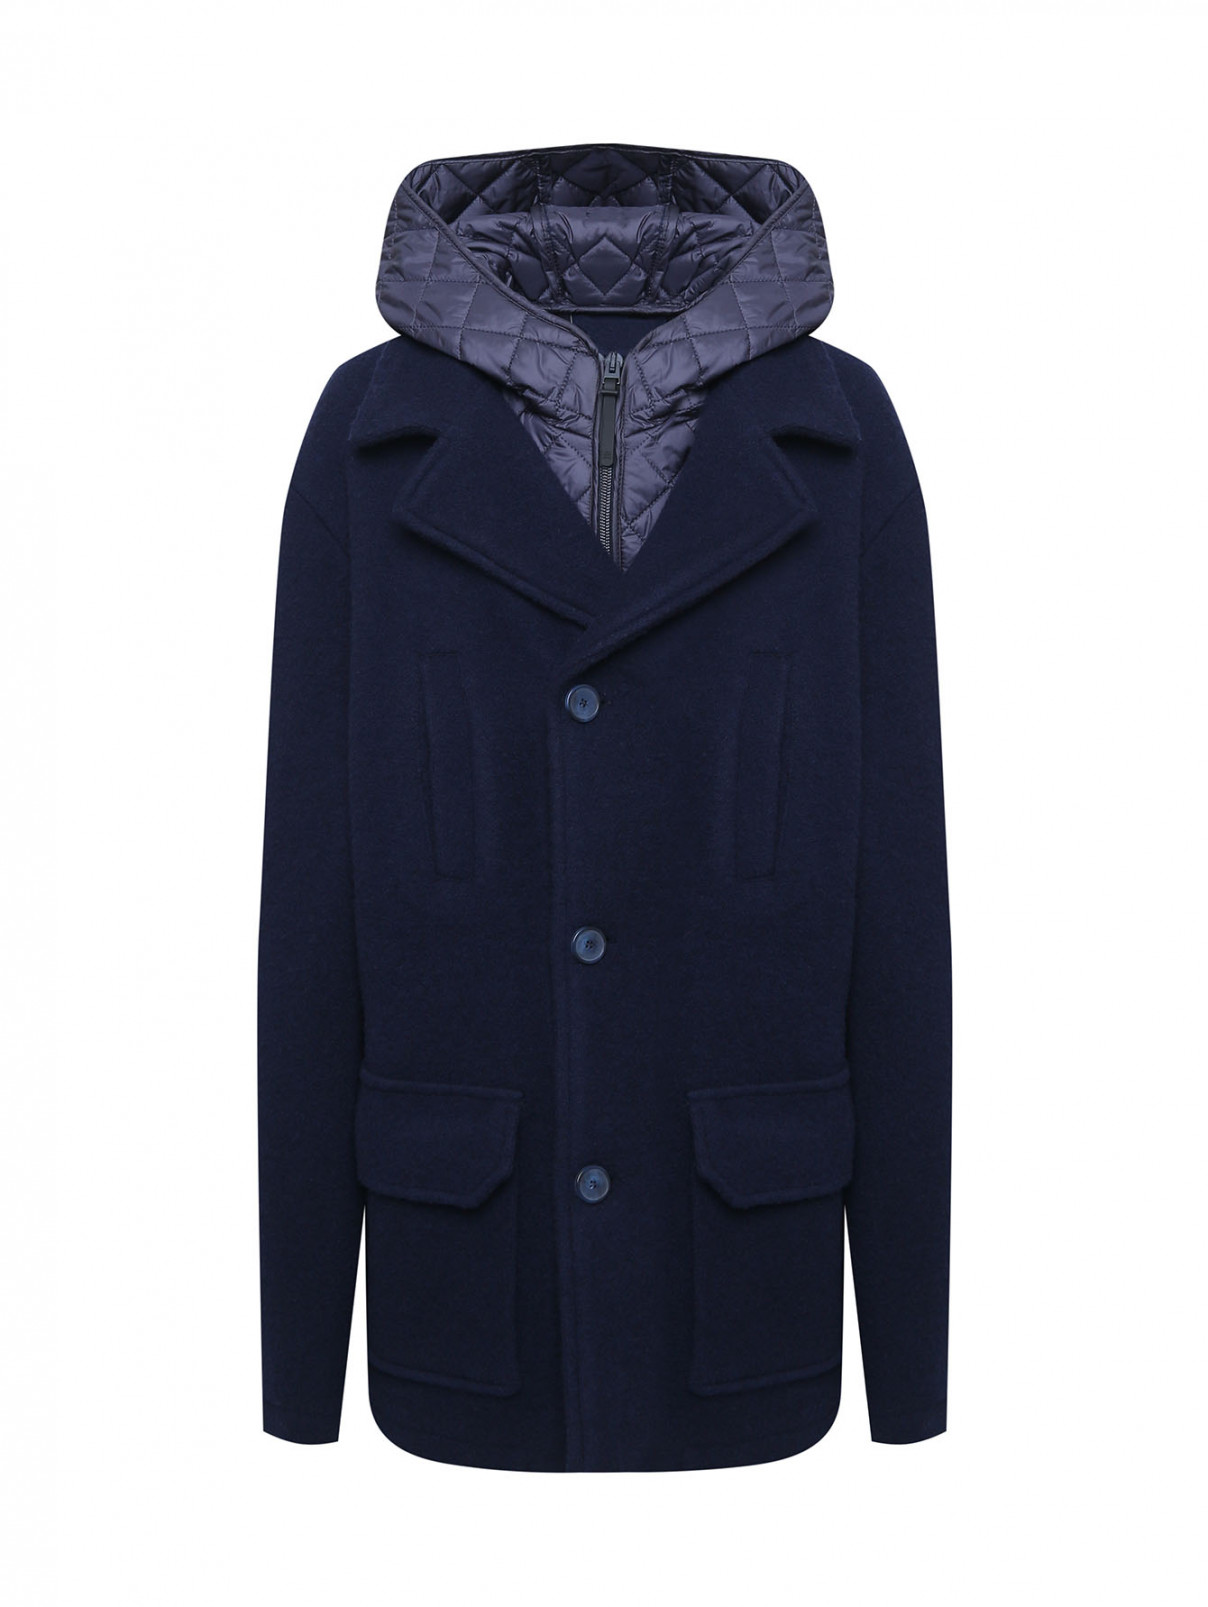 Пальто со съемным жилетом Il Gufo  –  Общий вид  – Цвет:  Синий